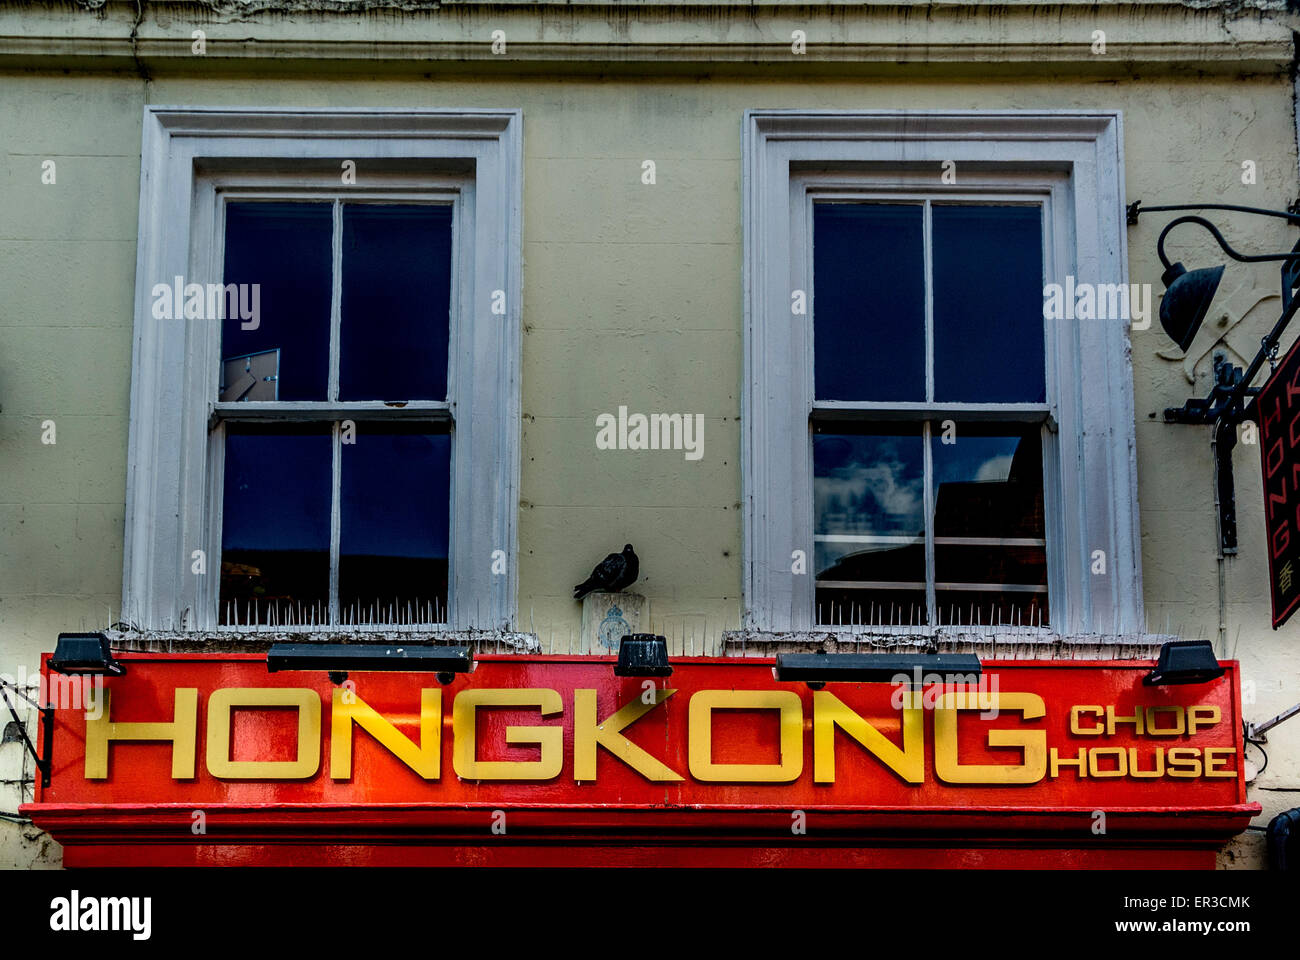 Hong Kong Chop House zum Mitnehmen Zeichen Stockfoto